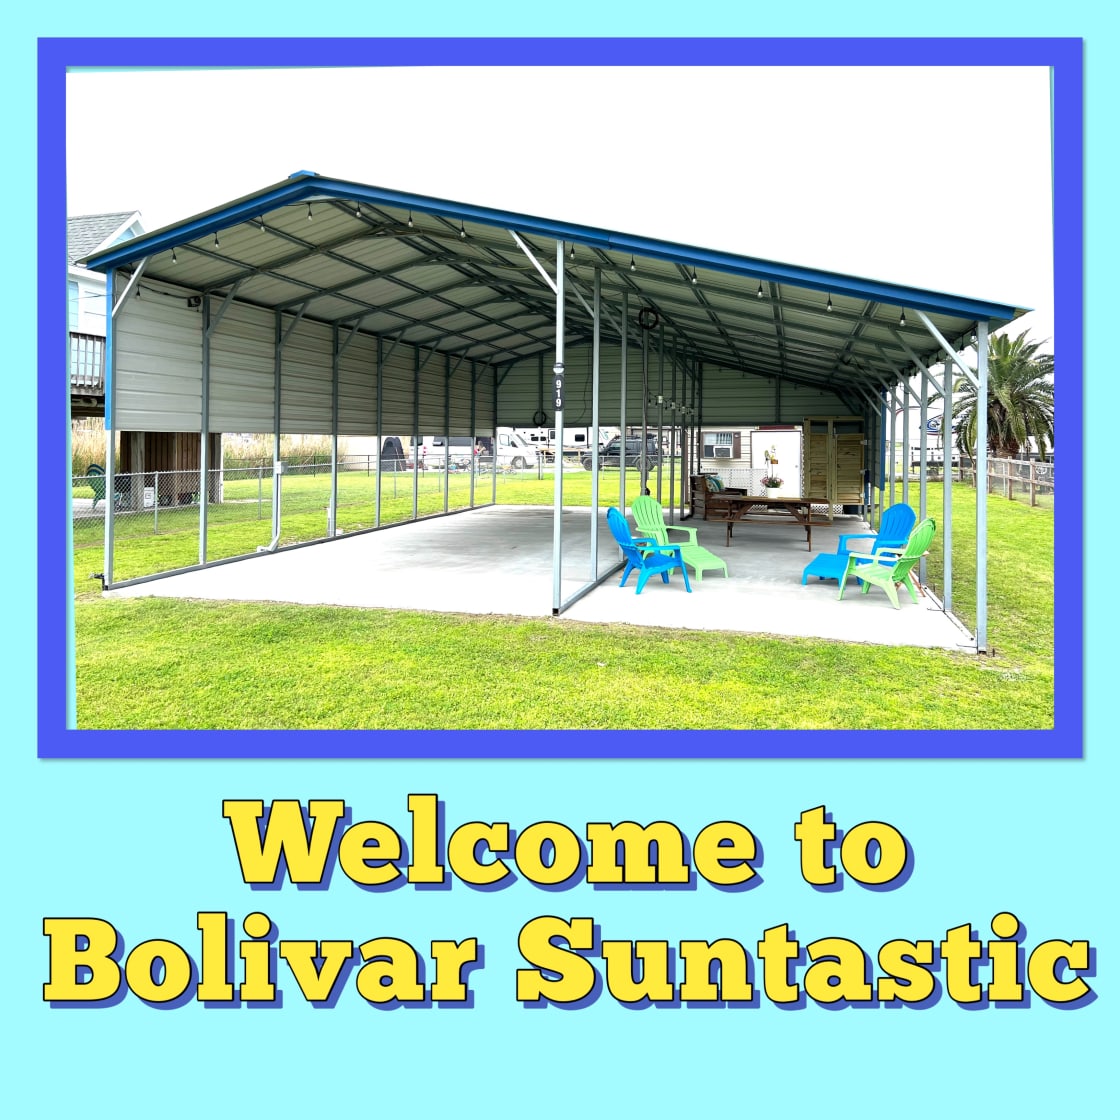 Bolivar Suntastic